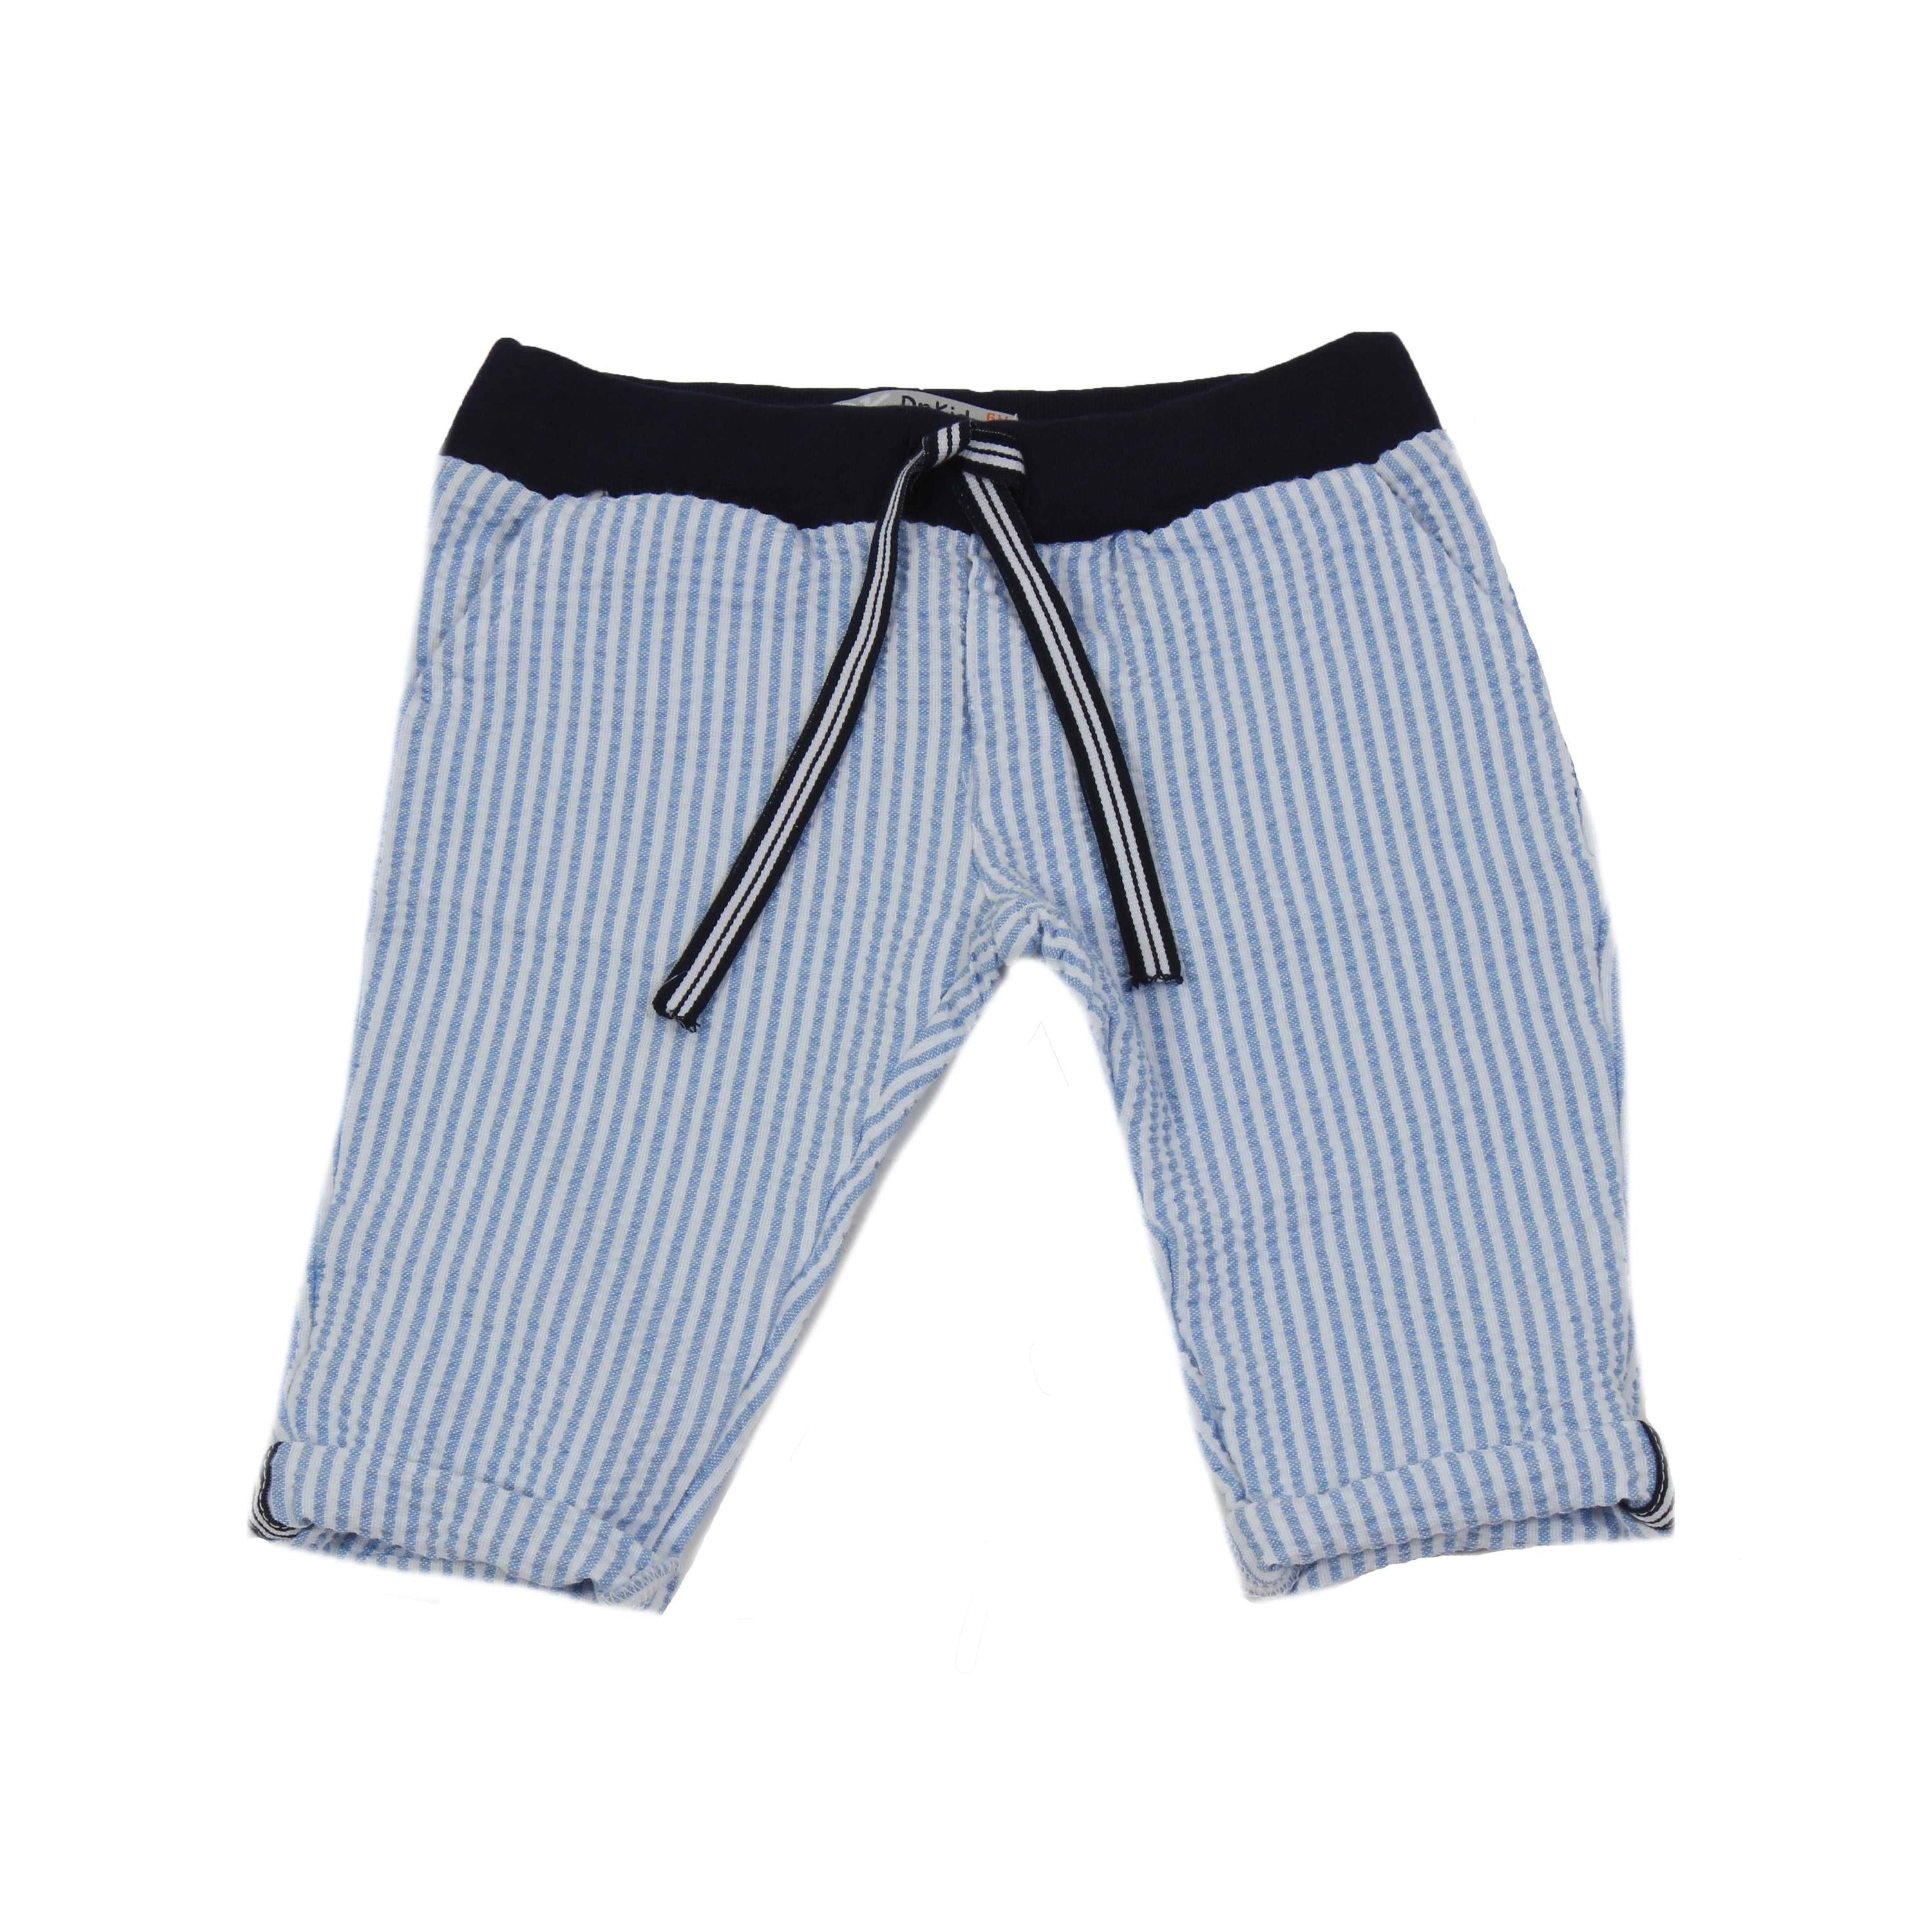 Pantalone Lungo in Cotone a Righe Celeste-Bianco Neonato DR KID DK523 - DR.KID - LuxuryKids